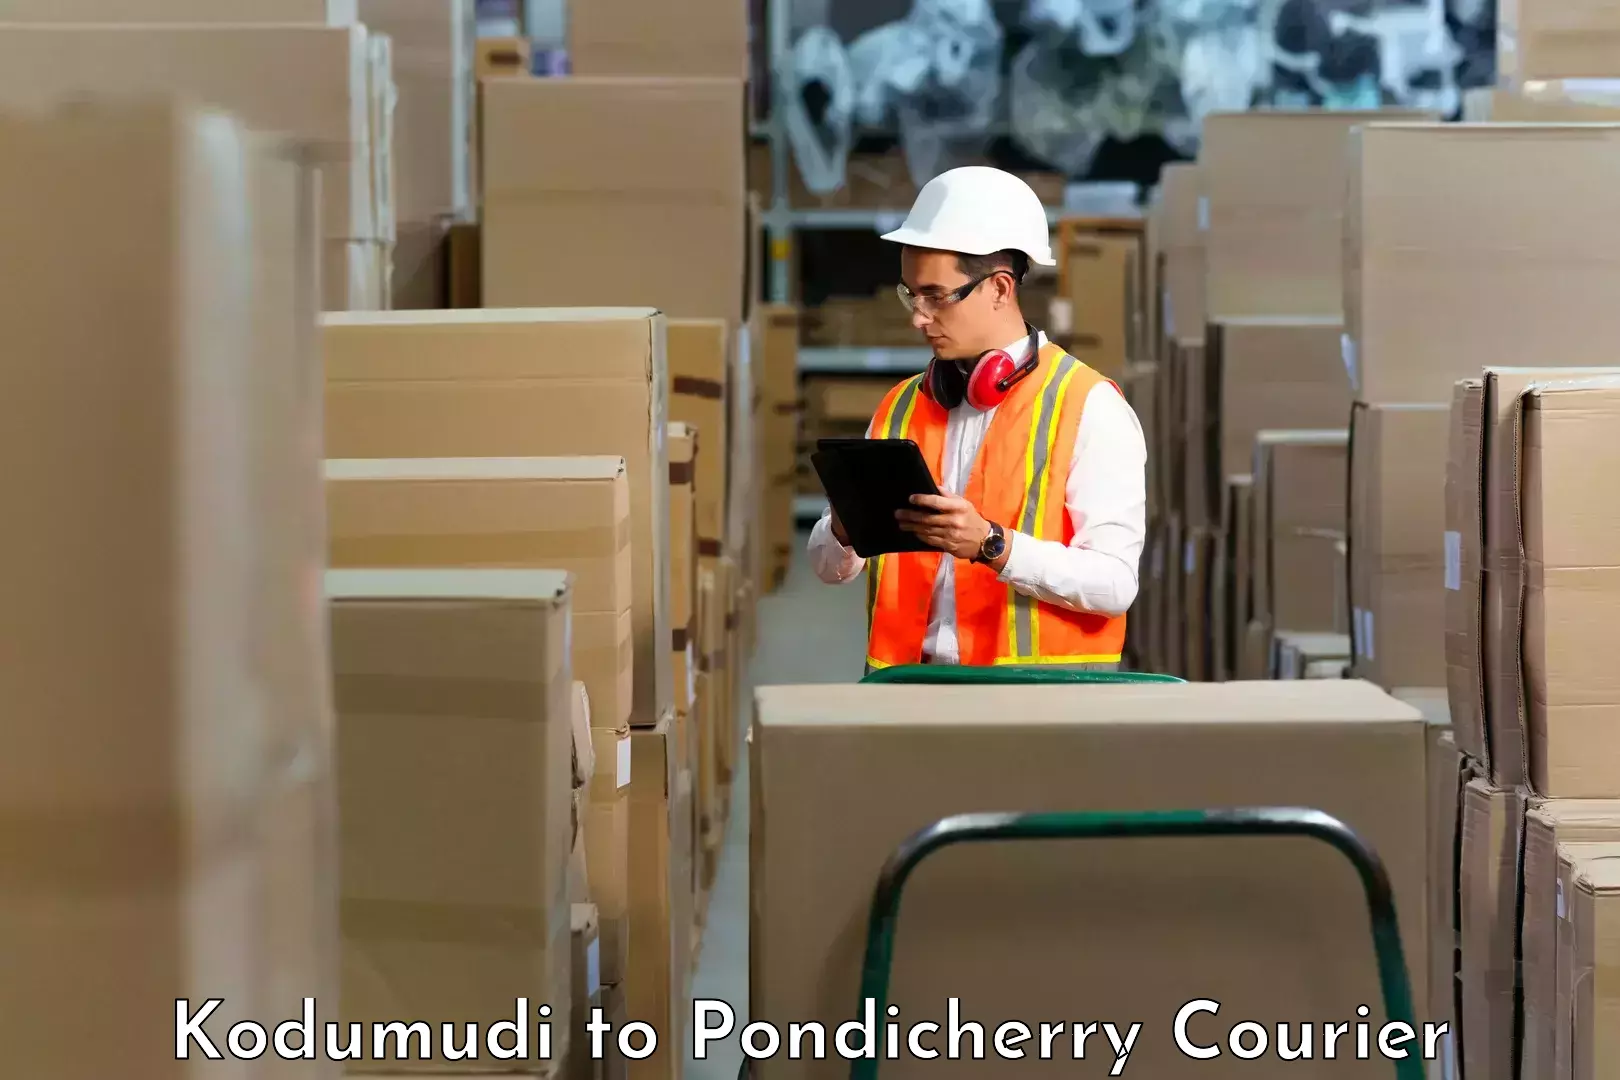 Reliable delivery network Kodumudi to Pondicherry